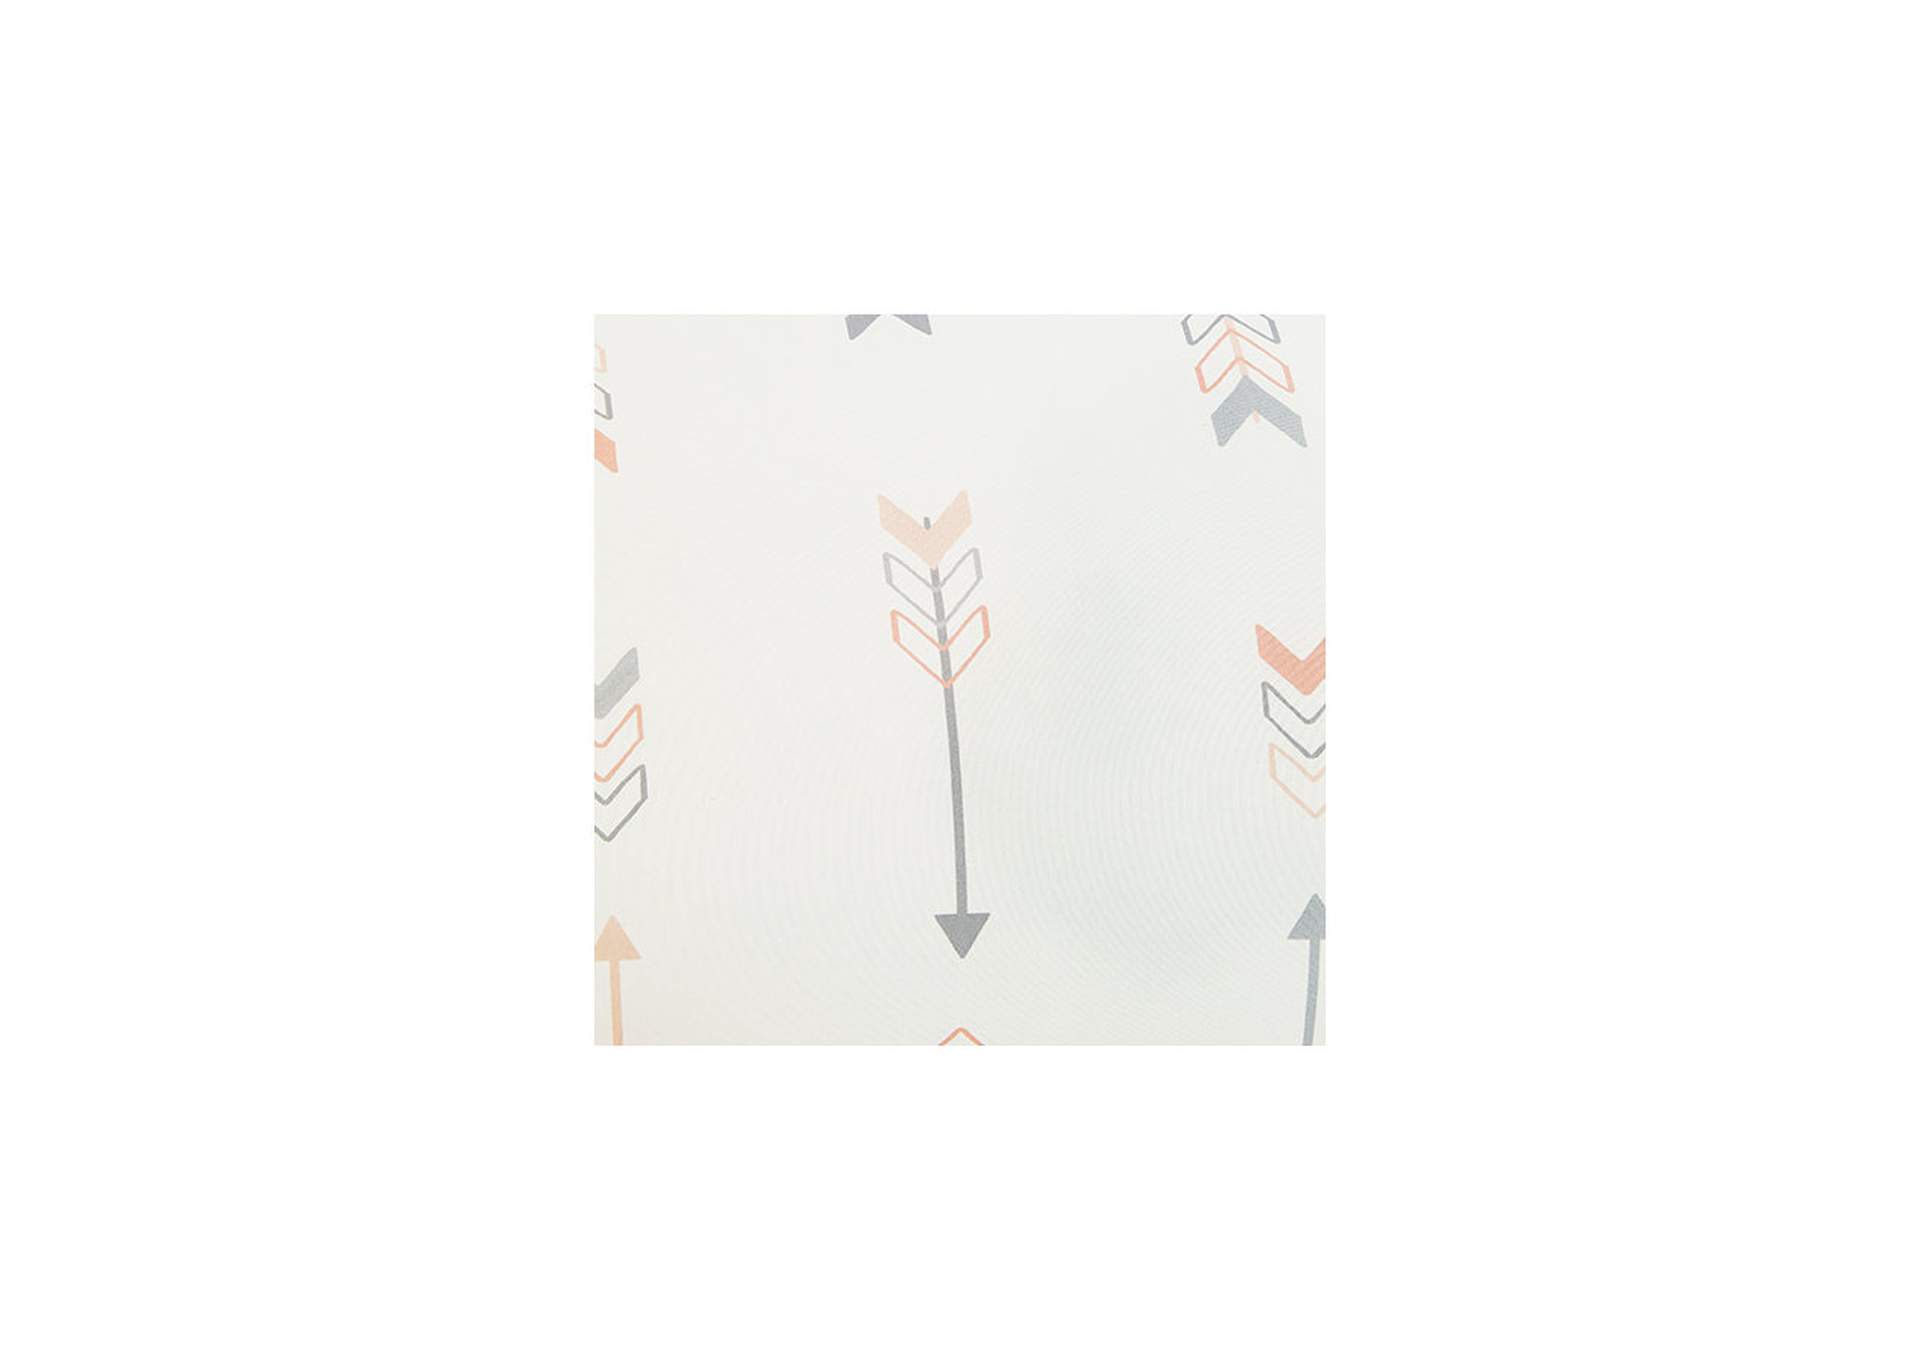 Lexann Twin Comforter Set,Signature Design By Ashley